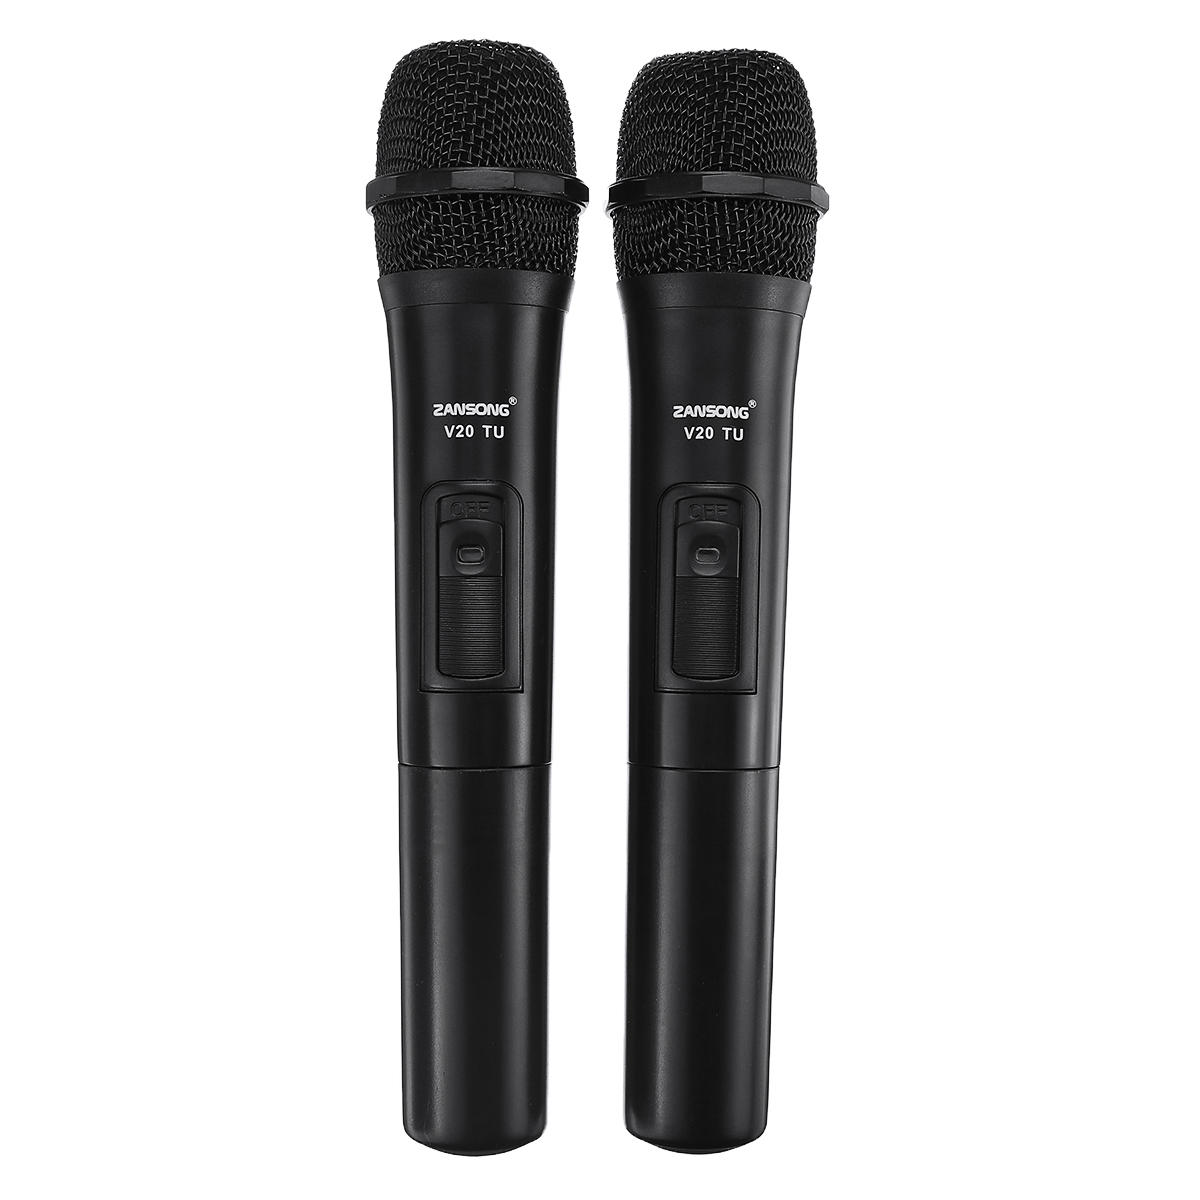 Uhf usb 3.5mm 6.35mm wireless microphone megaphone  mic with receiver for karaoke speech loudspeaker